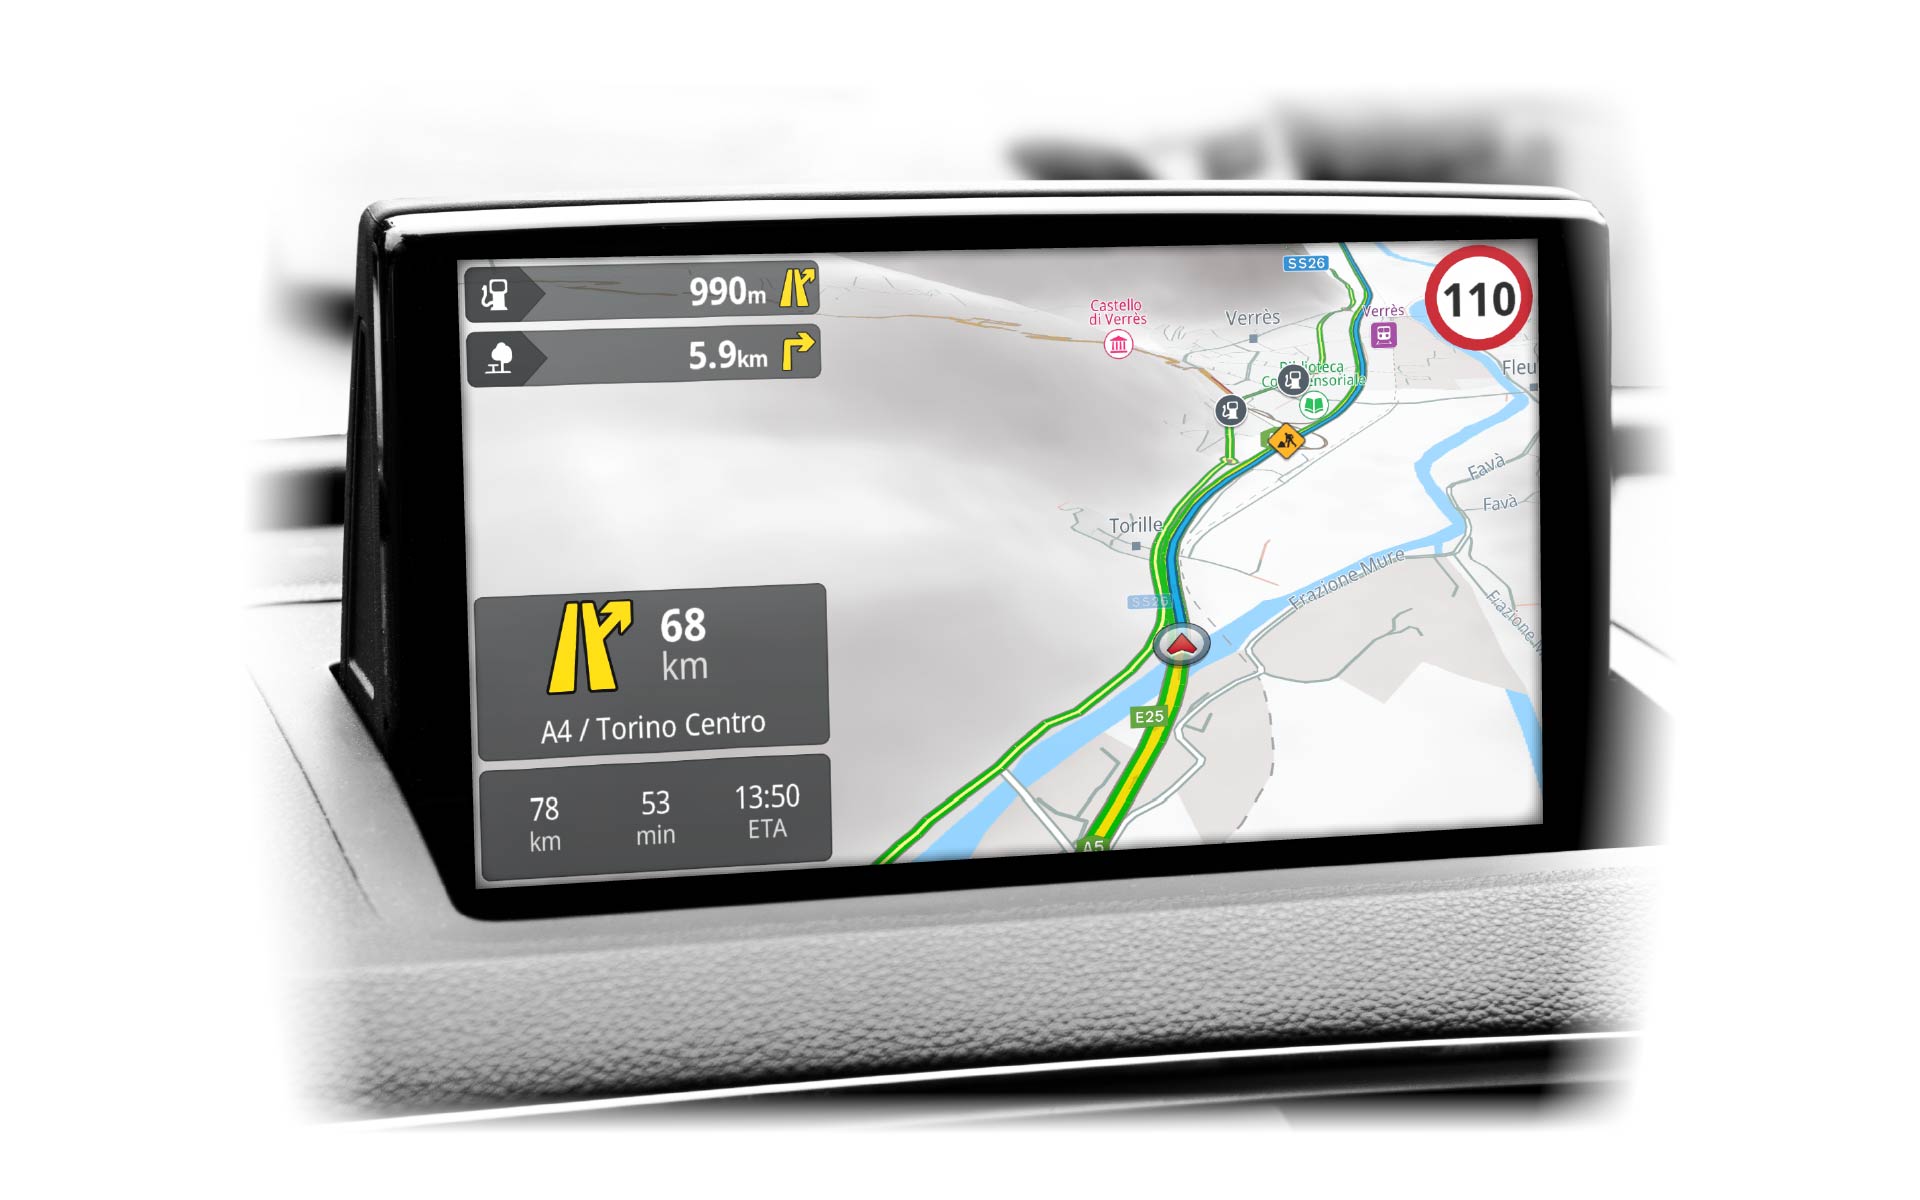 Embedded GPS Navigation